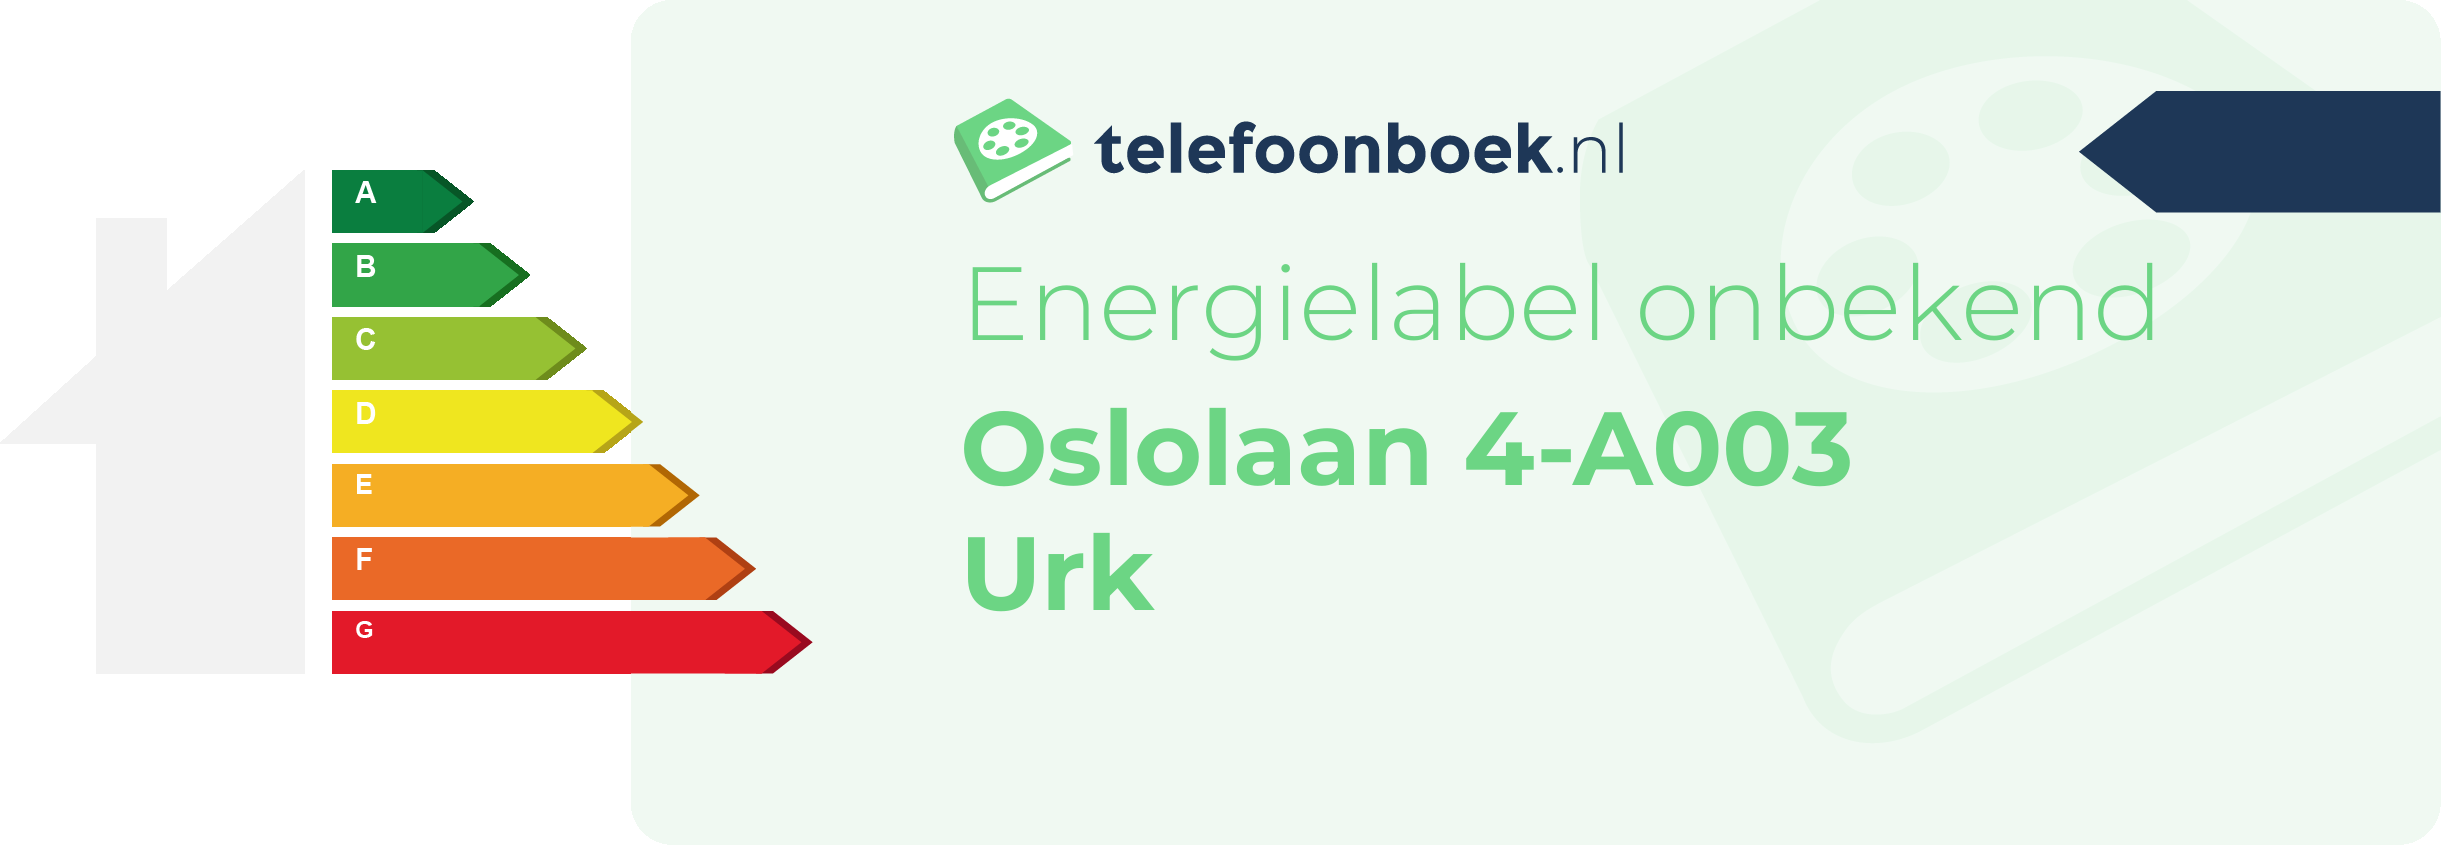 Energielabel Oslolaan 4-A003 Urk